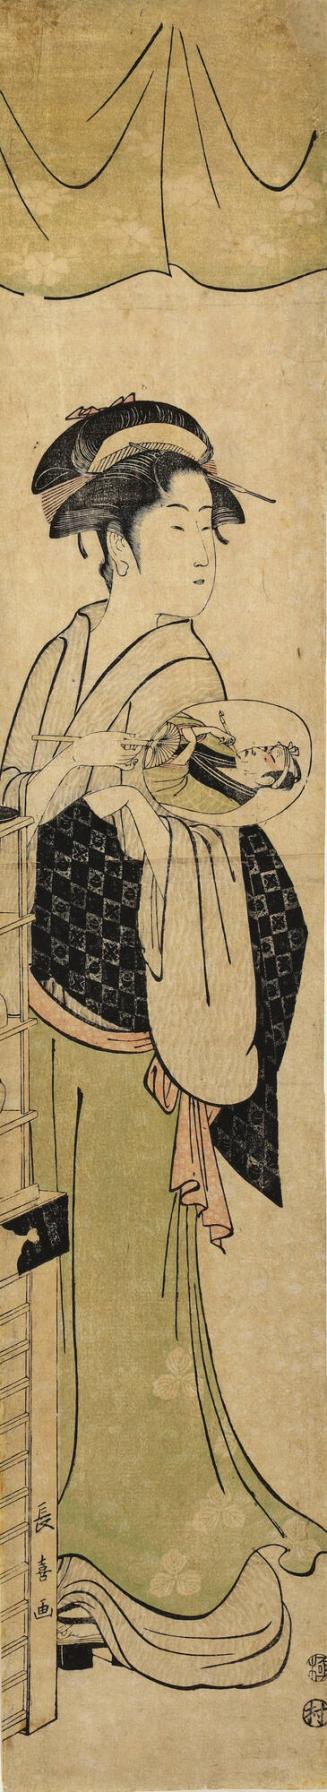 The Waitress Ohisa of the Takashimaya Teahouse Holding a Fan with a Portrait of the Actor Matsumoto Koshiro IV as the Fisherman Gorobei by Sharaku